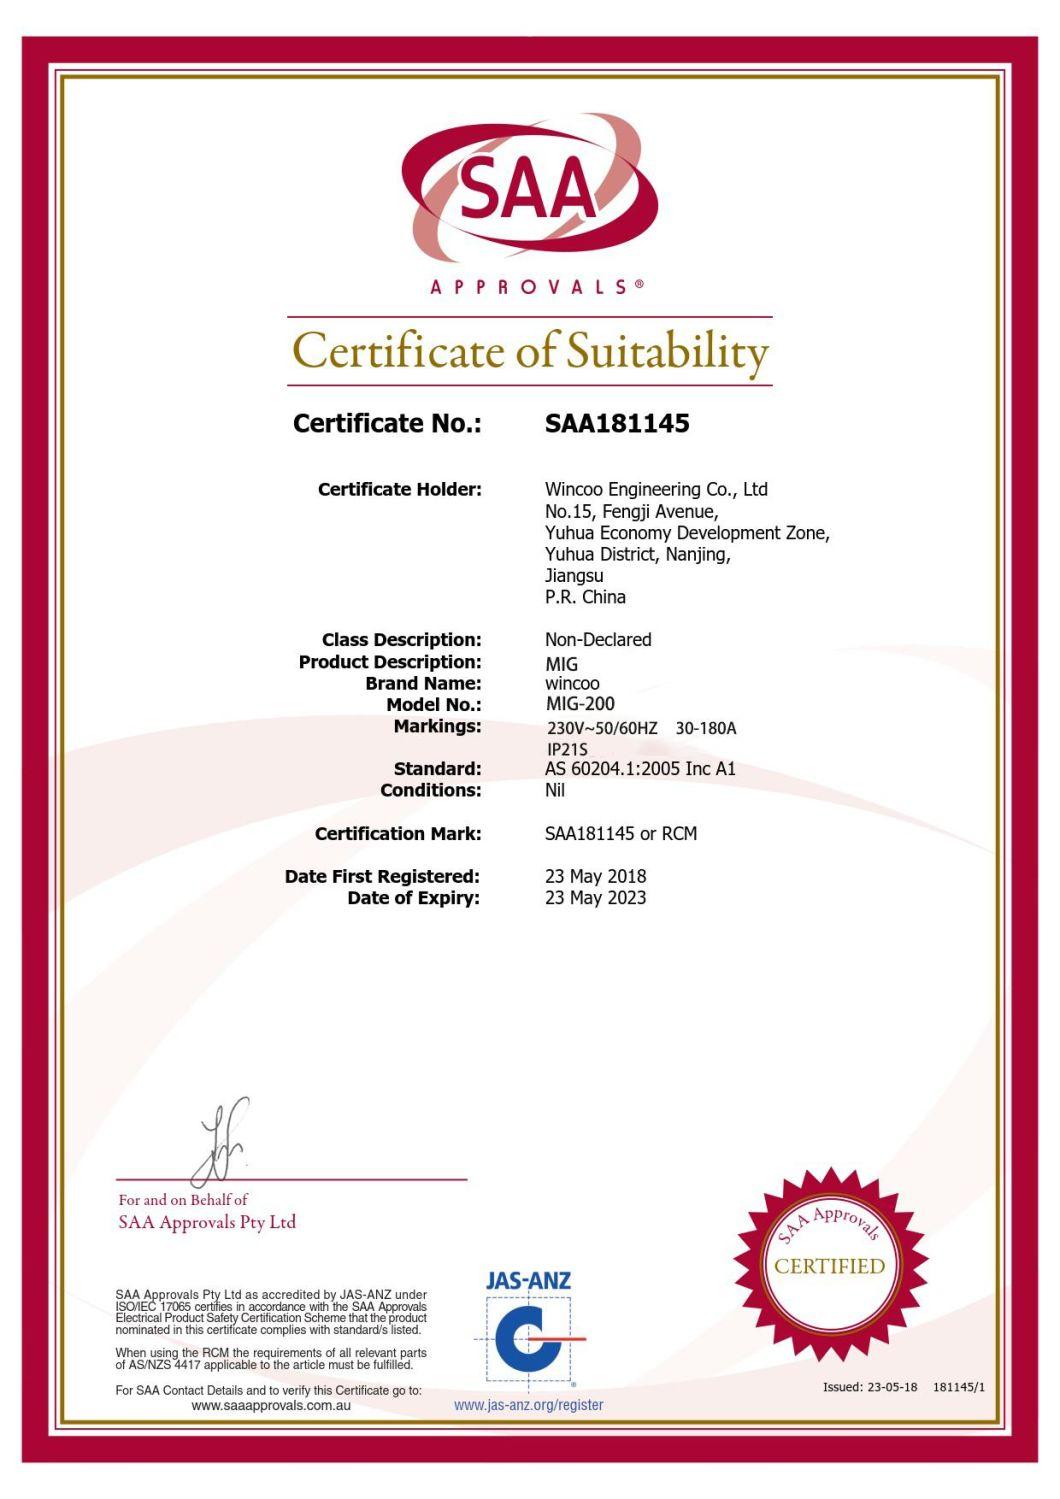 Fiber Laser Welding Machine Handheld Laser Welder Stainless Steel Equipment 1000W Metal Laser Cutting Suppliers with CE Certificate